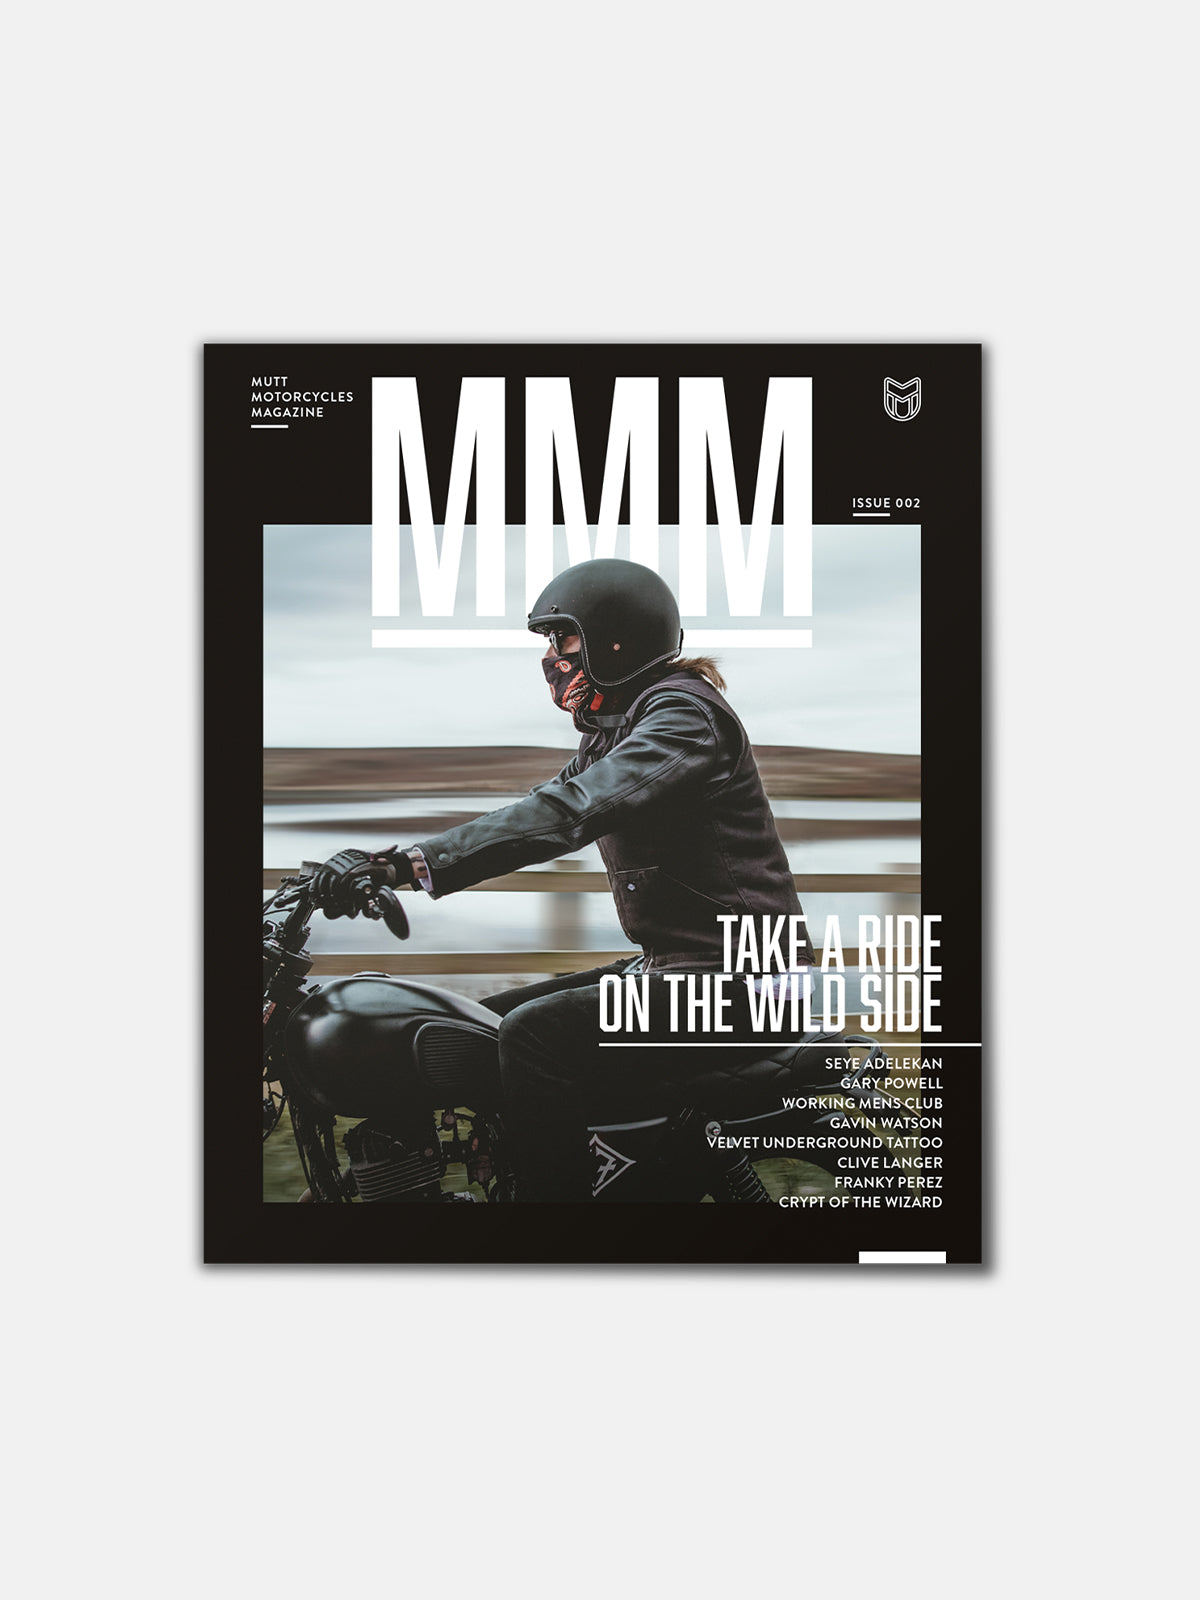 Mutt Motorcycles Magazine #002